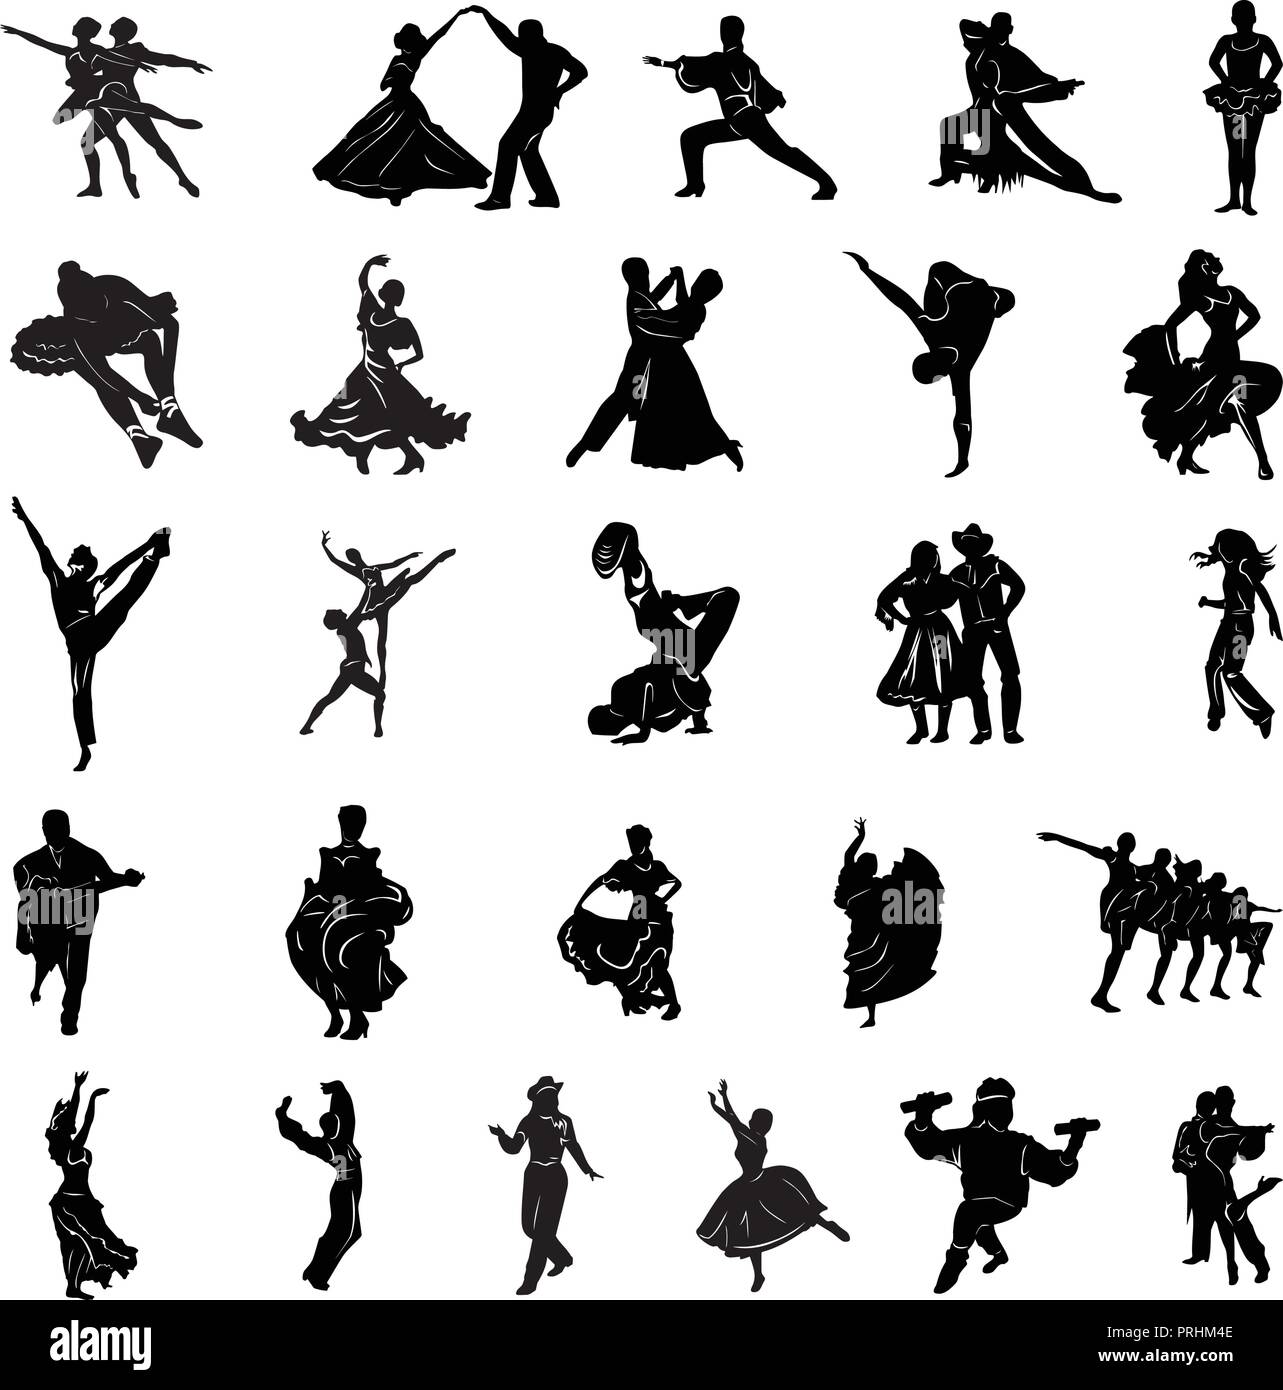 Tänzerin Personen silhouette Kollektion. Vector Illustration. Stock Vektor